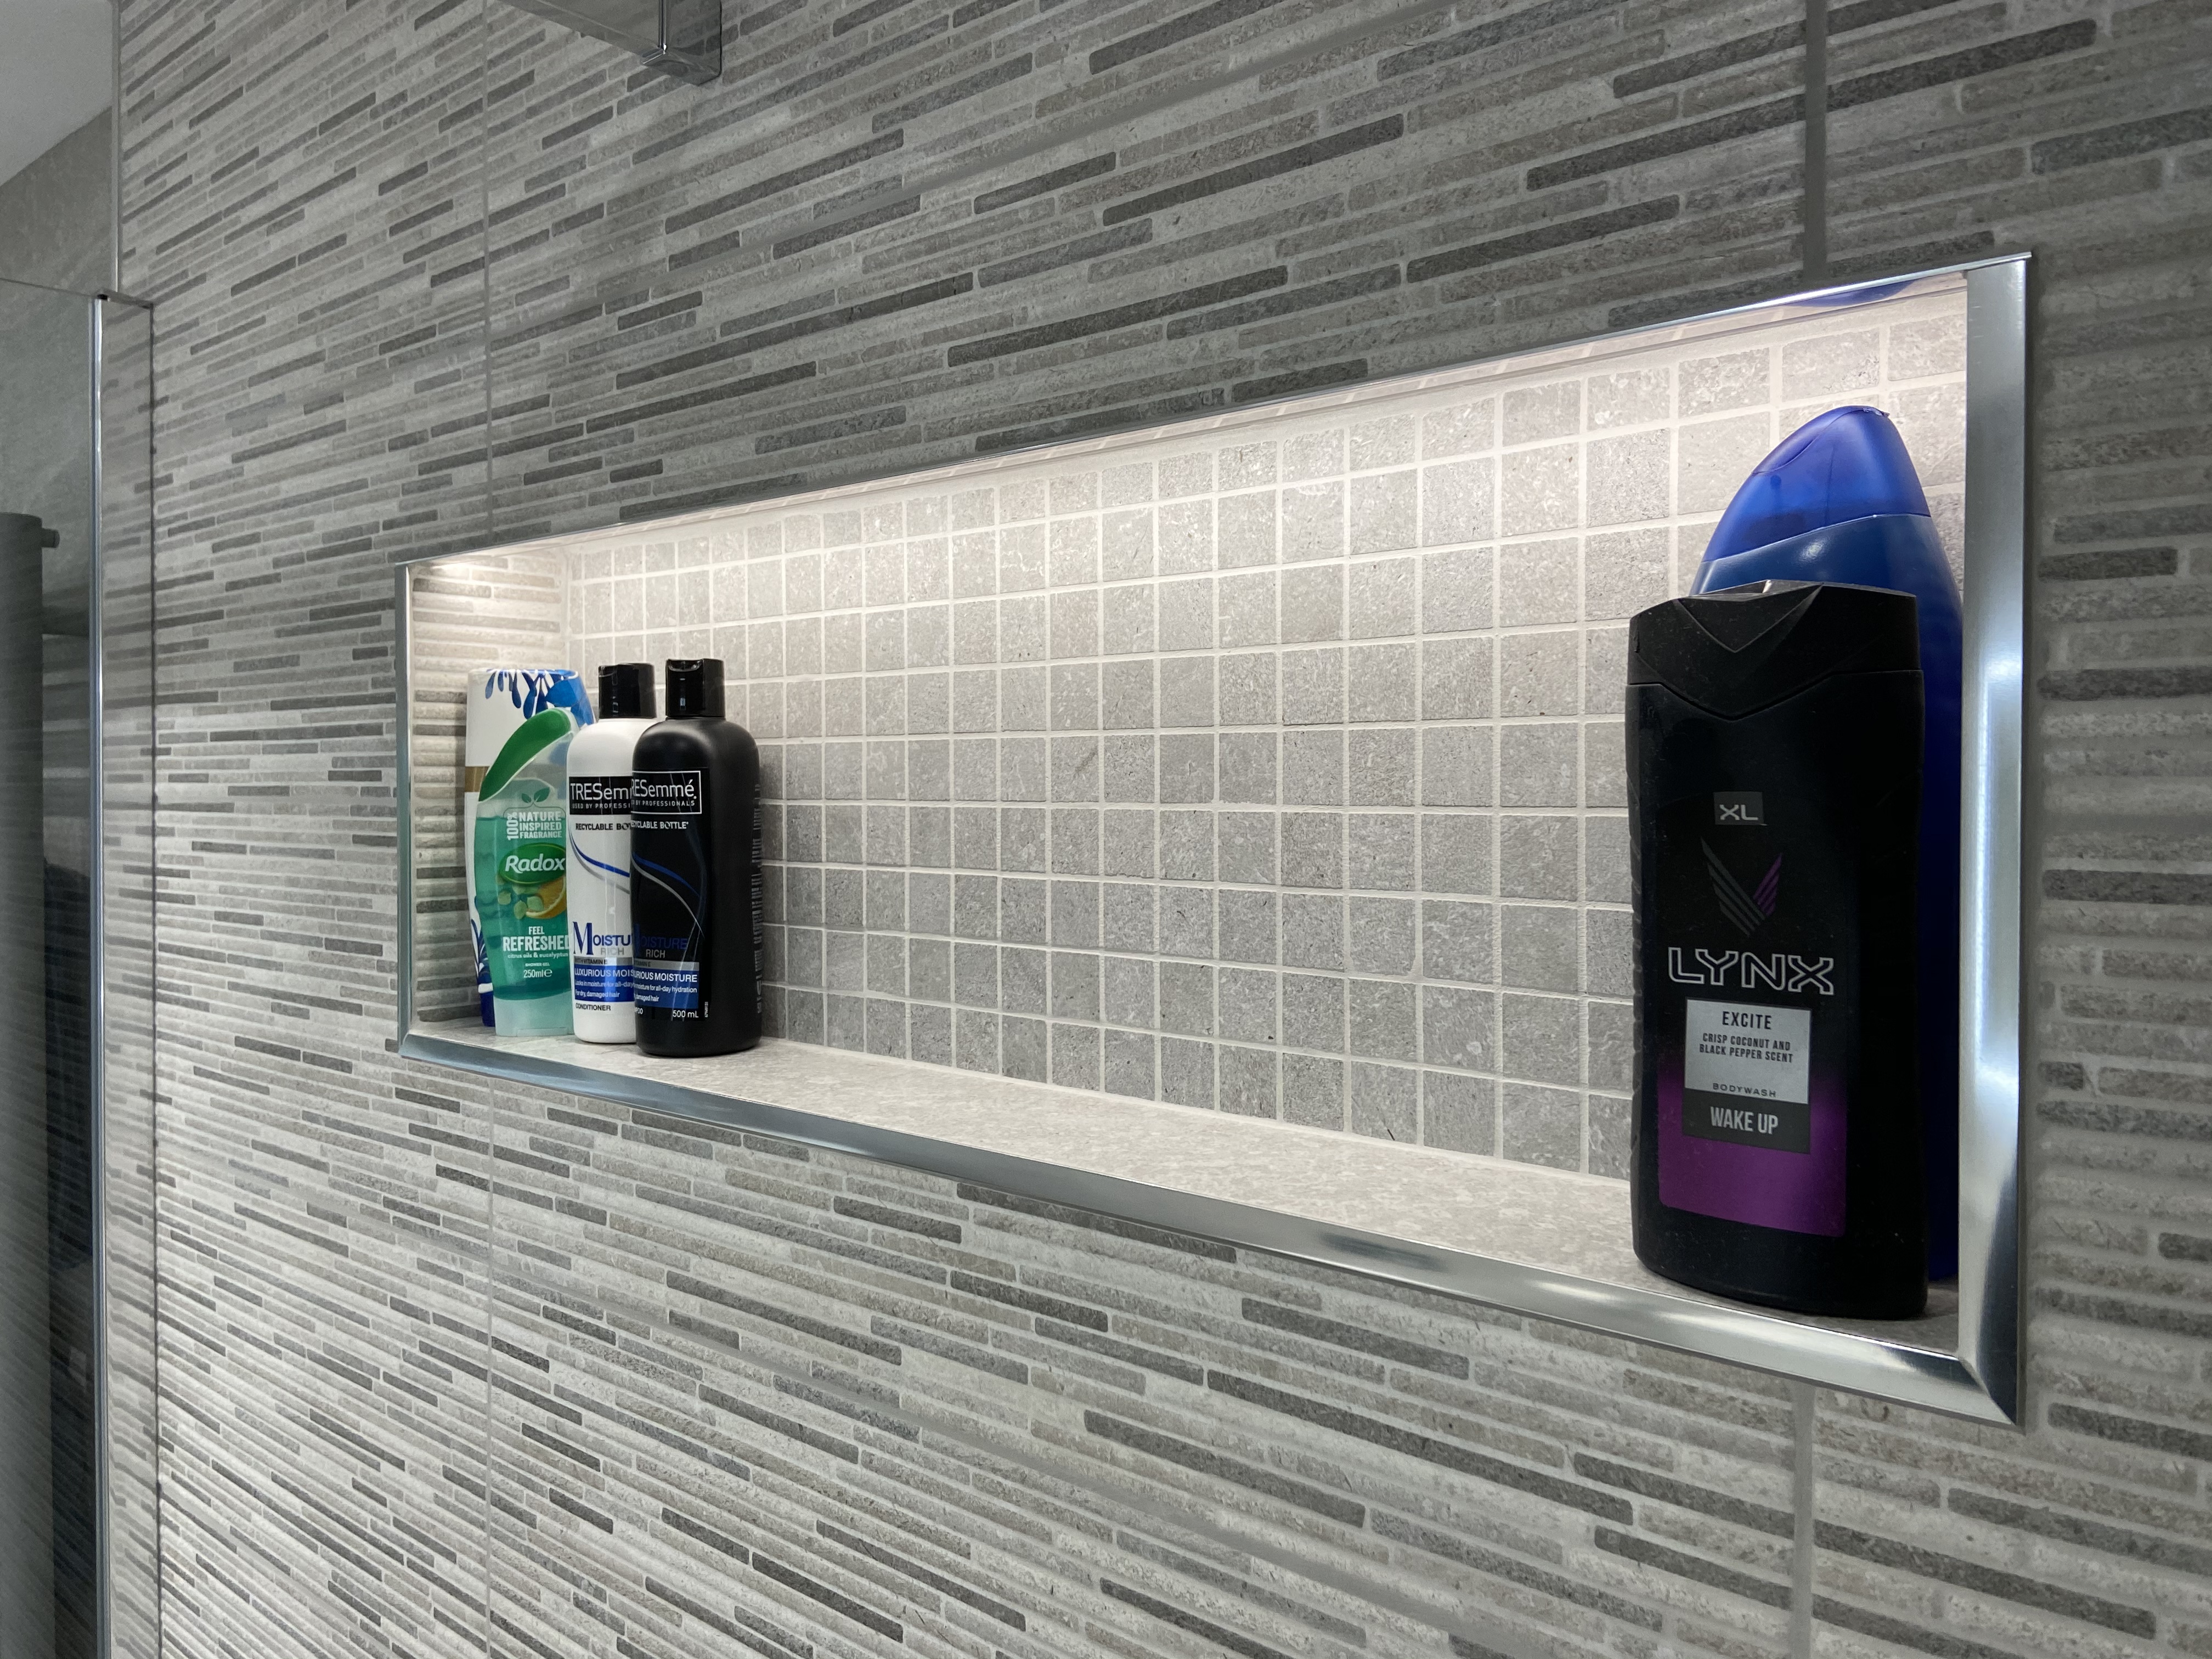 Recent Bathroom/Shower room completed 2021